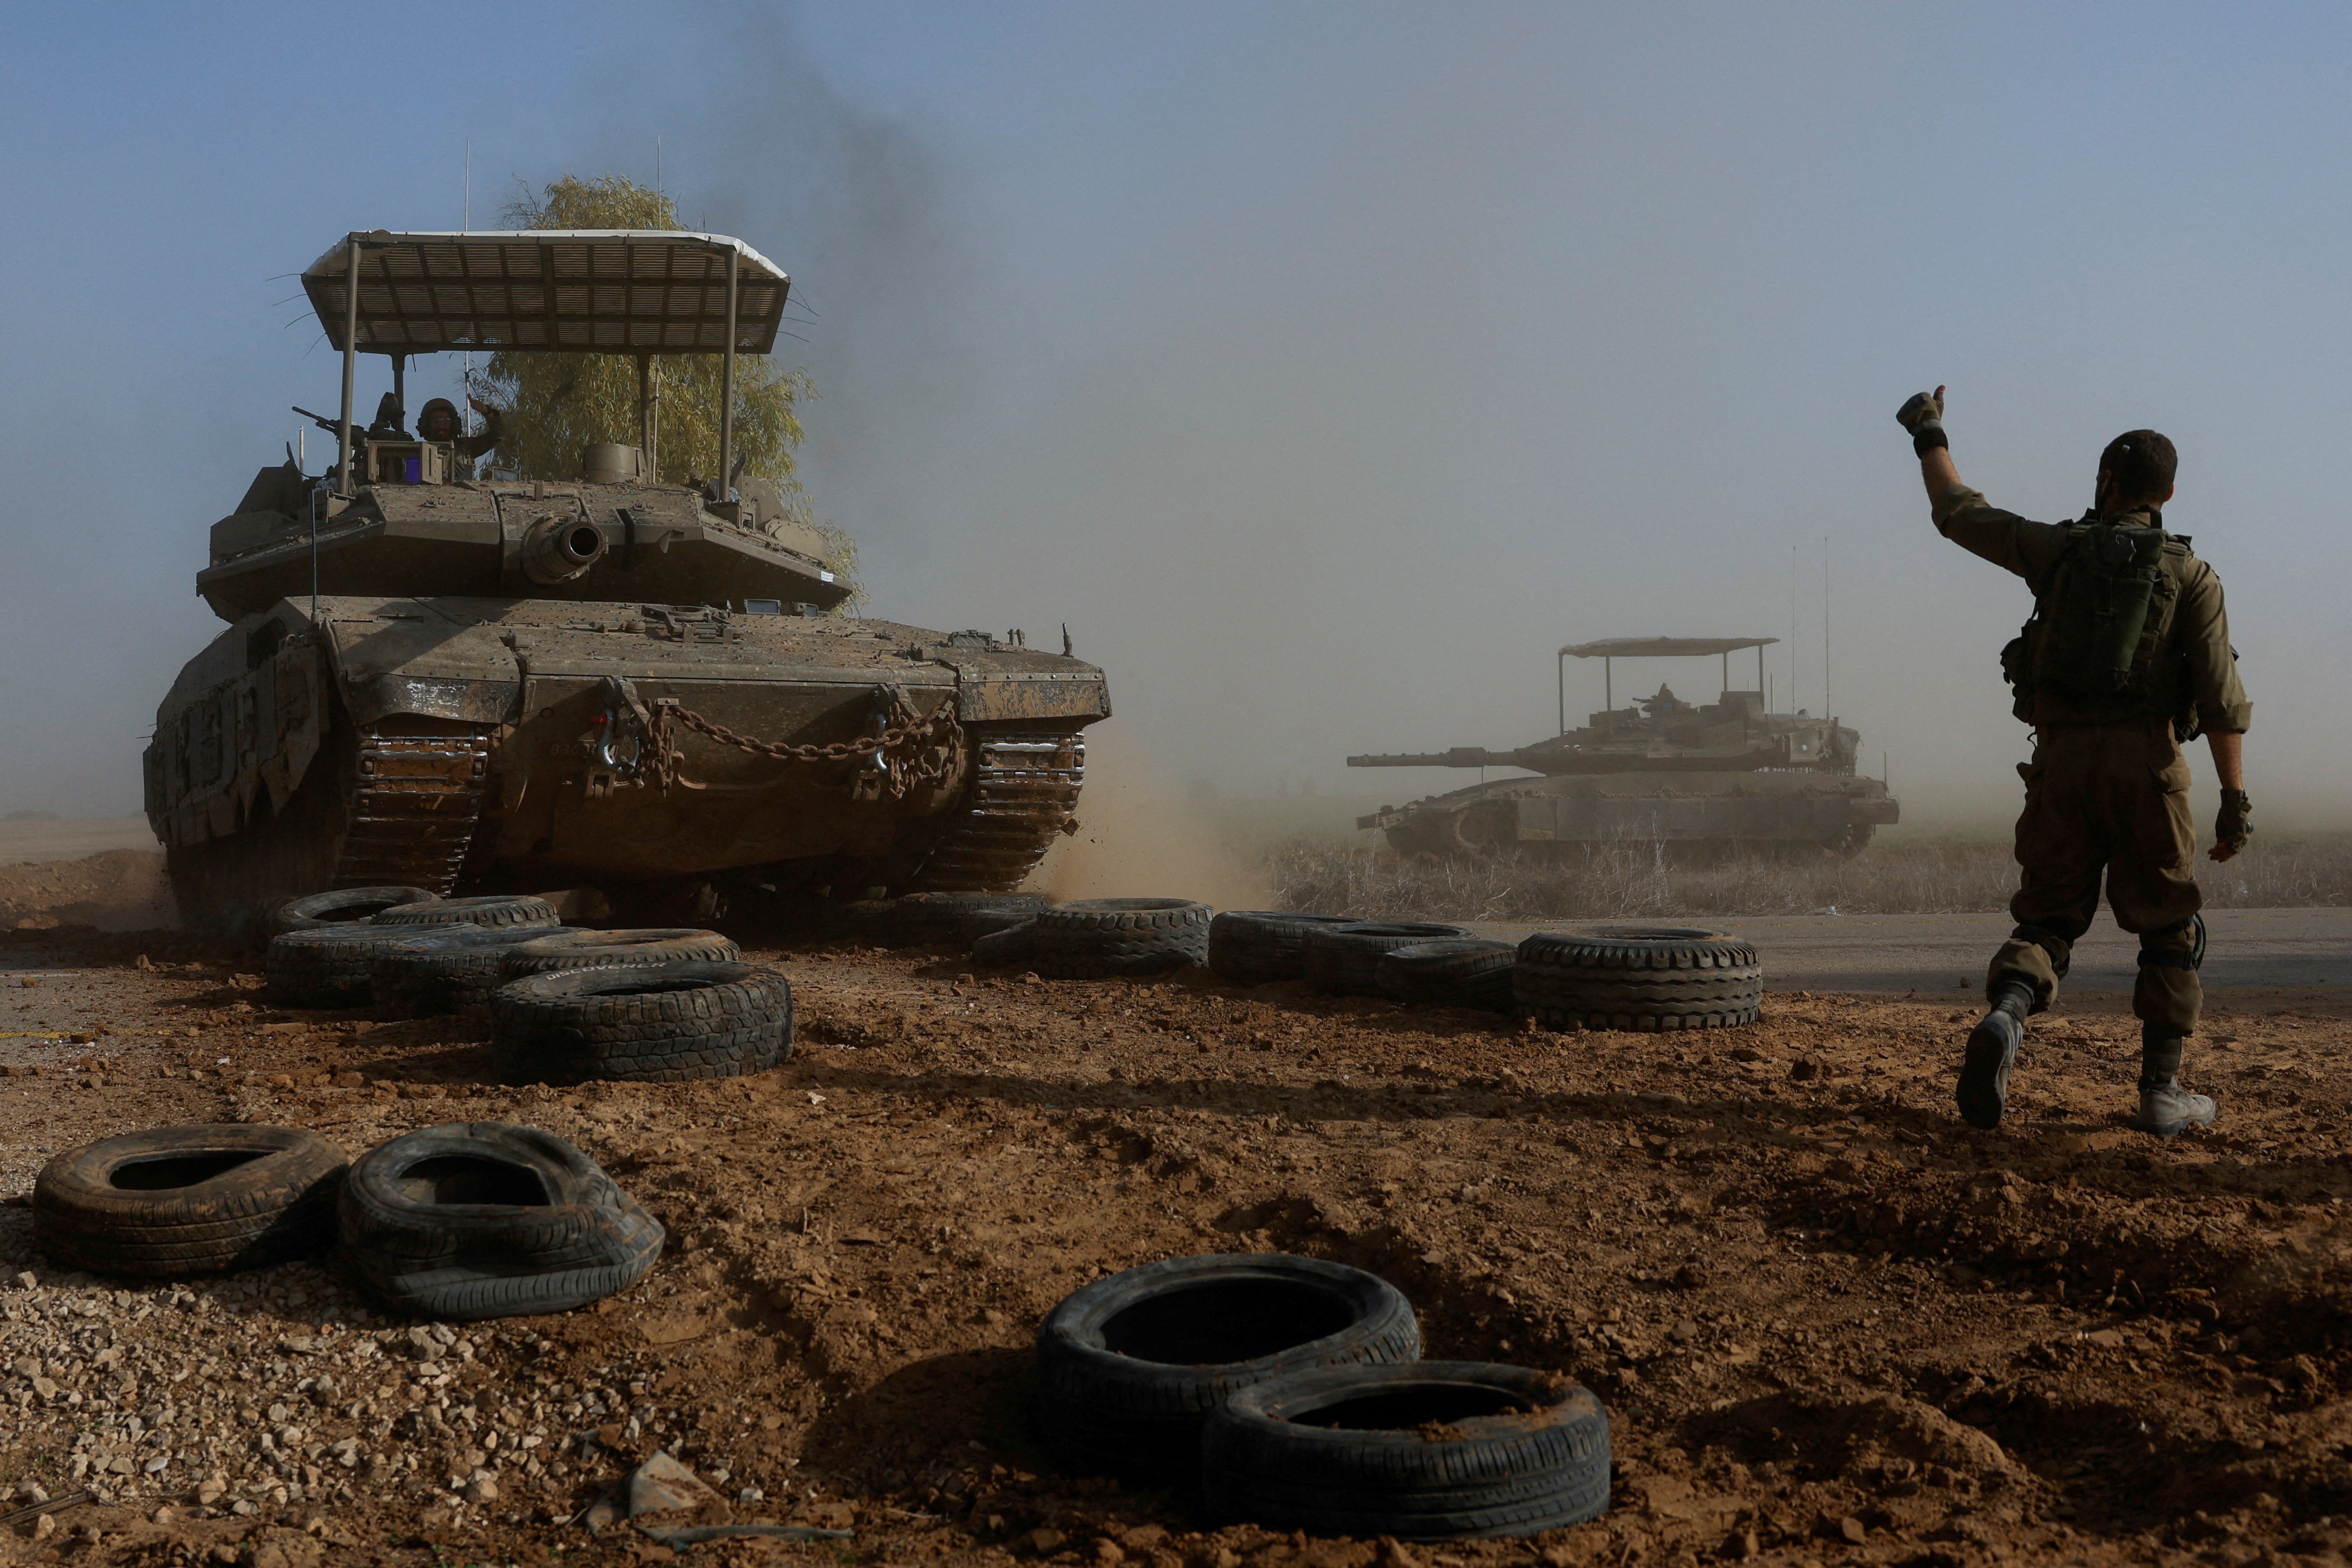 An Israeli soldier gestures towards a tank crew member as it crosses a road